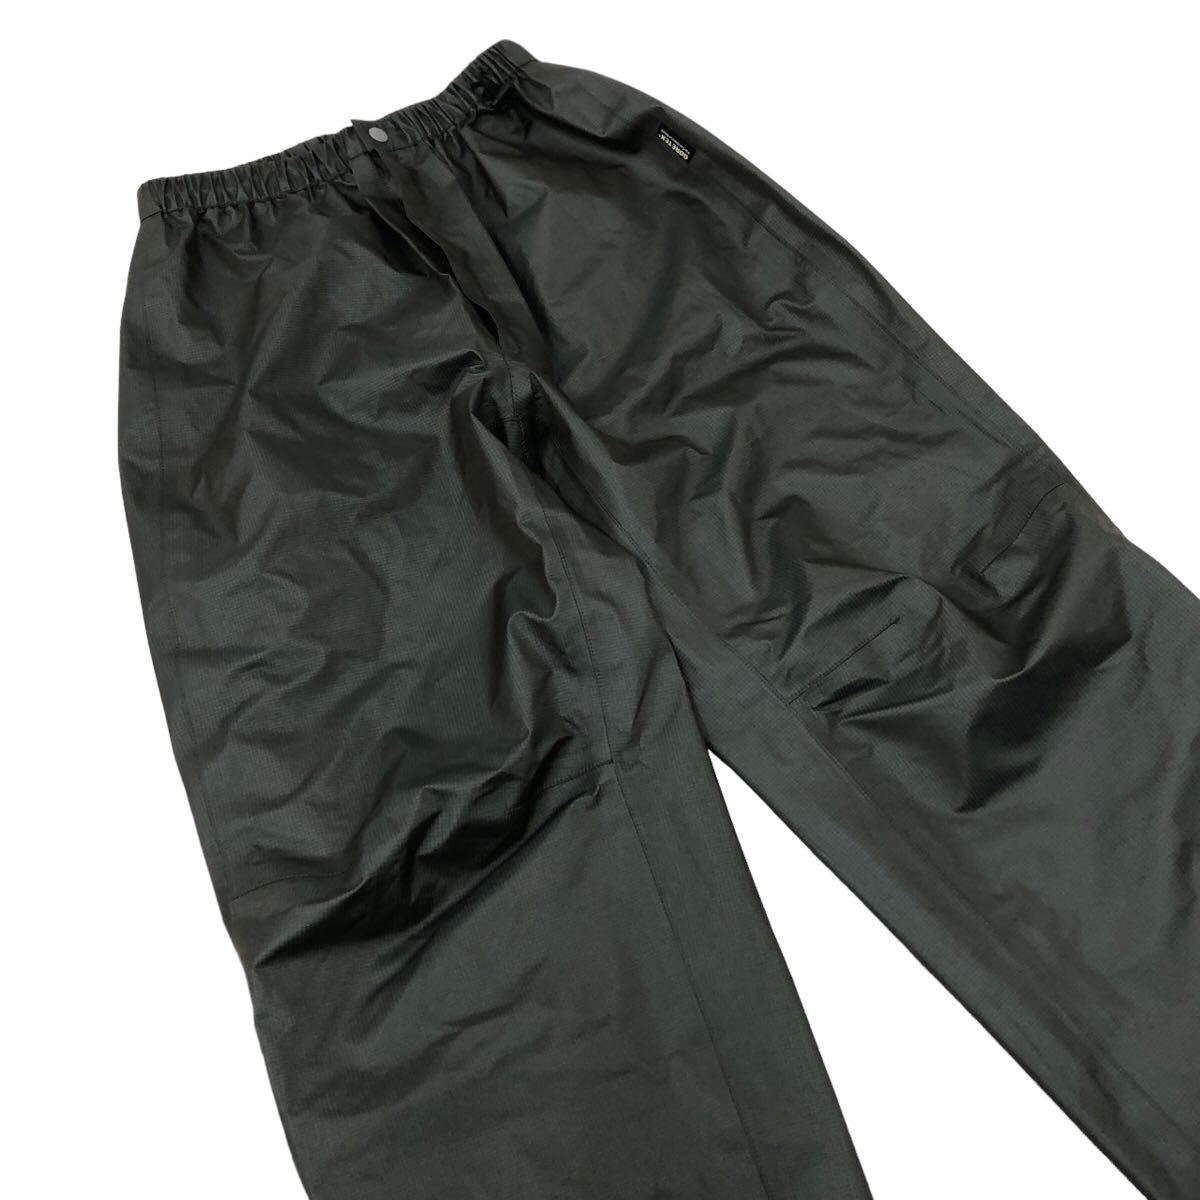 Nm209 GORE-TEX Performance Shell Gore-Tex Performance shell nylon pants pants bottoms outdoor khaki series lady's S